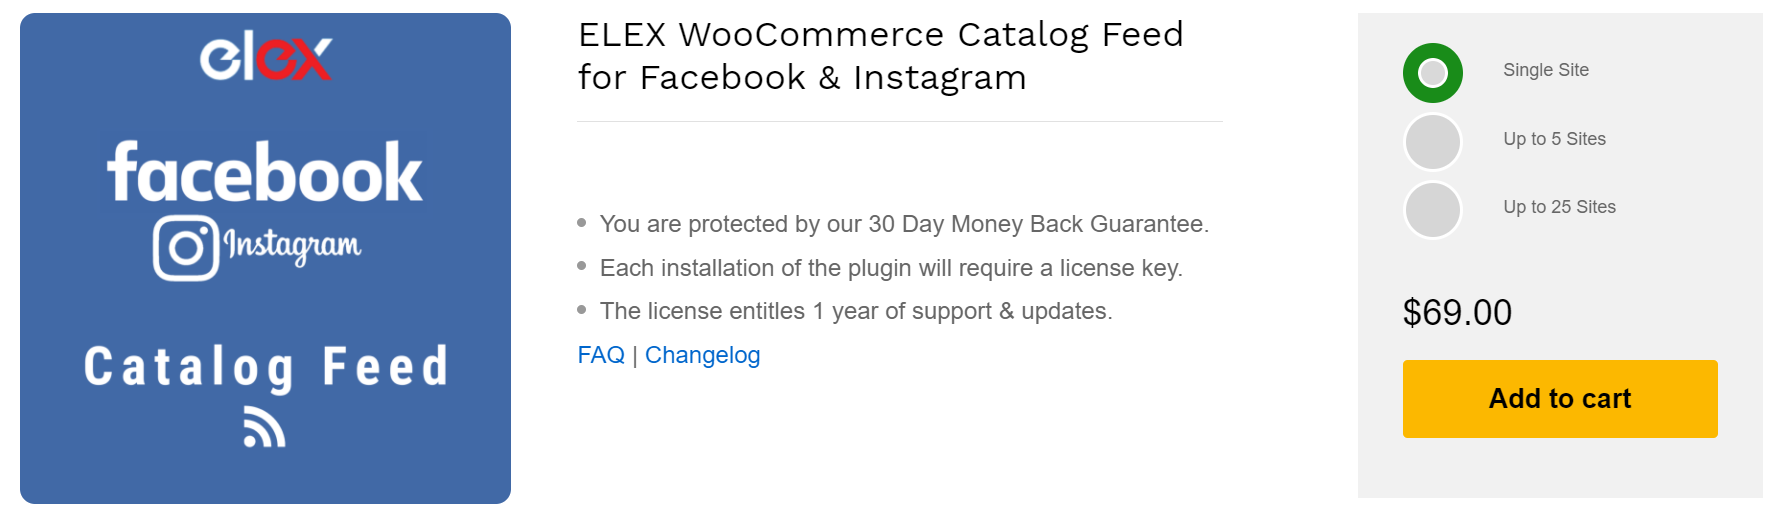 WooCommerce Facebook Shopping Feed Plugins | ELEX WooCommerce Catalog Feed for Facebook